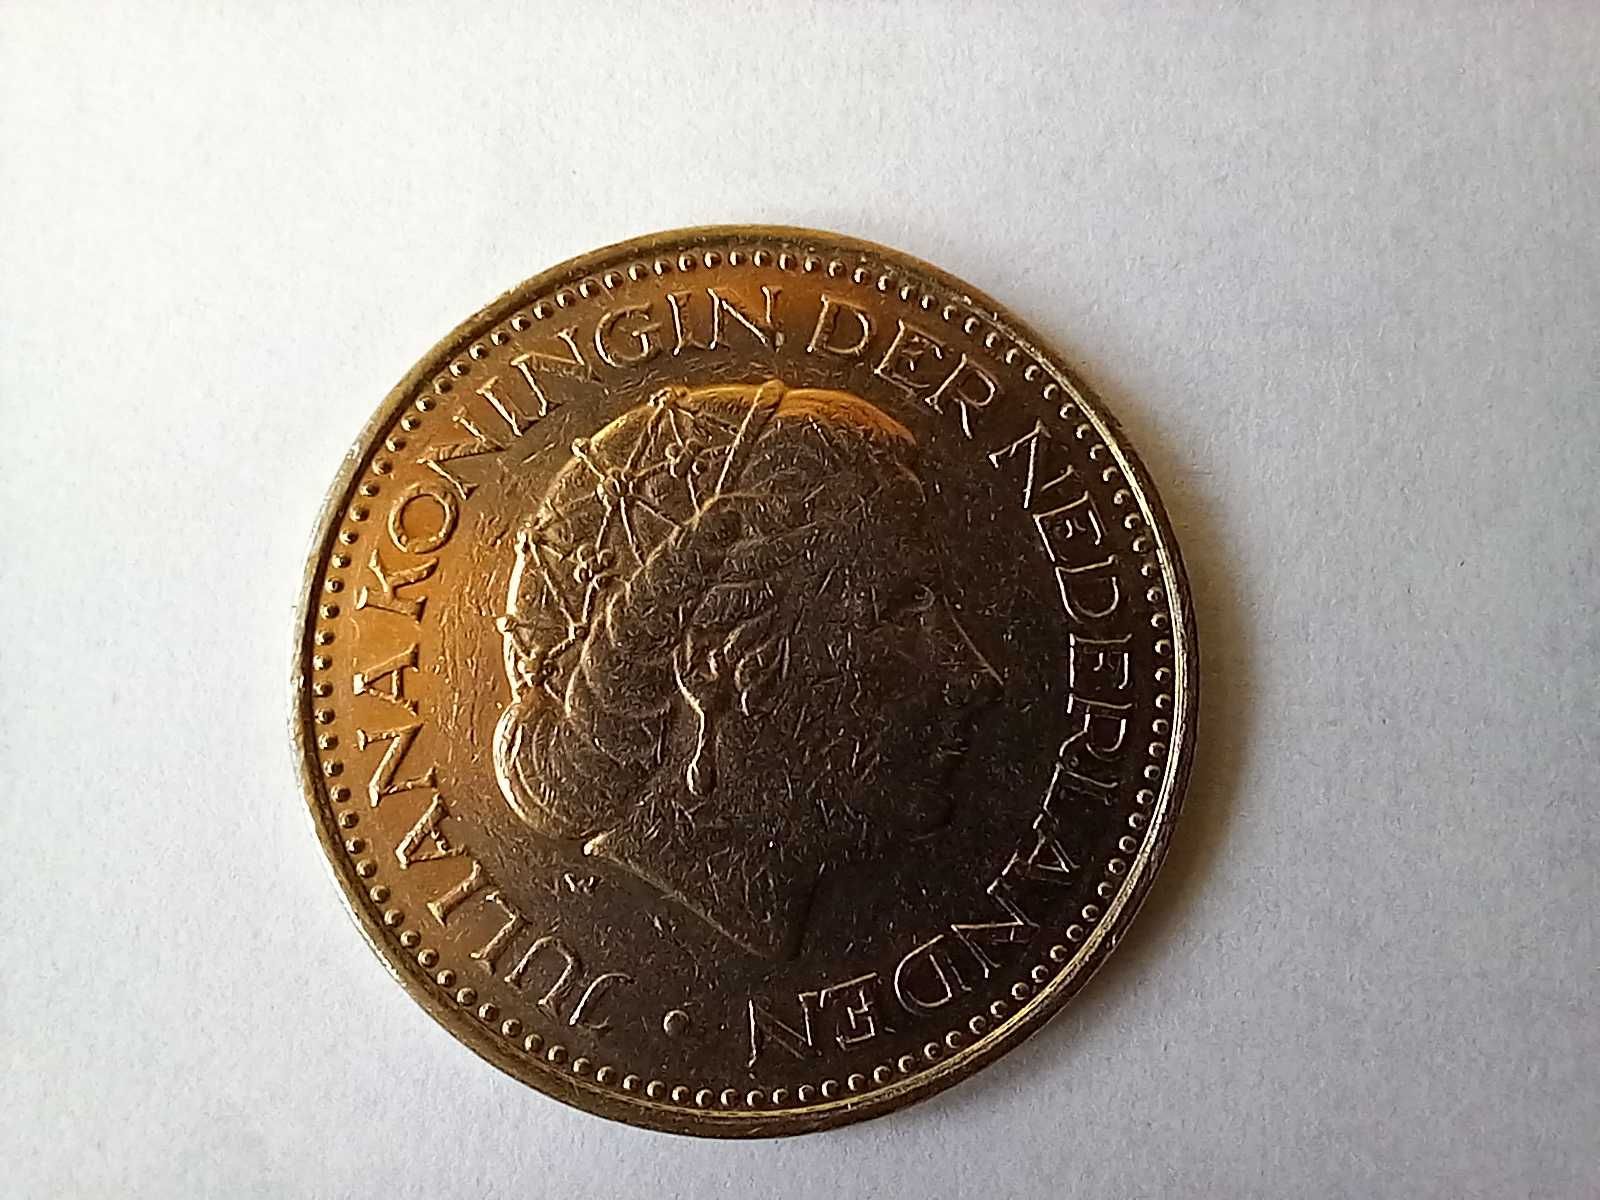 Moneta Holandia - 1 gulden 1971 /1/